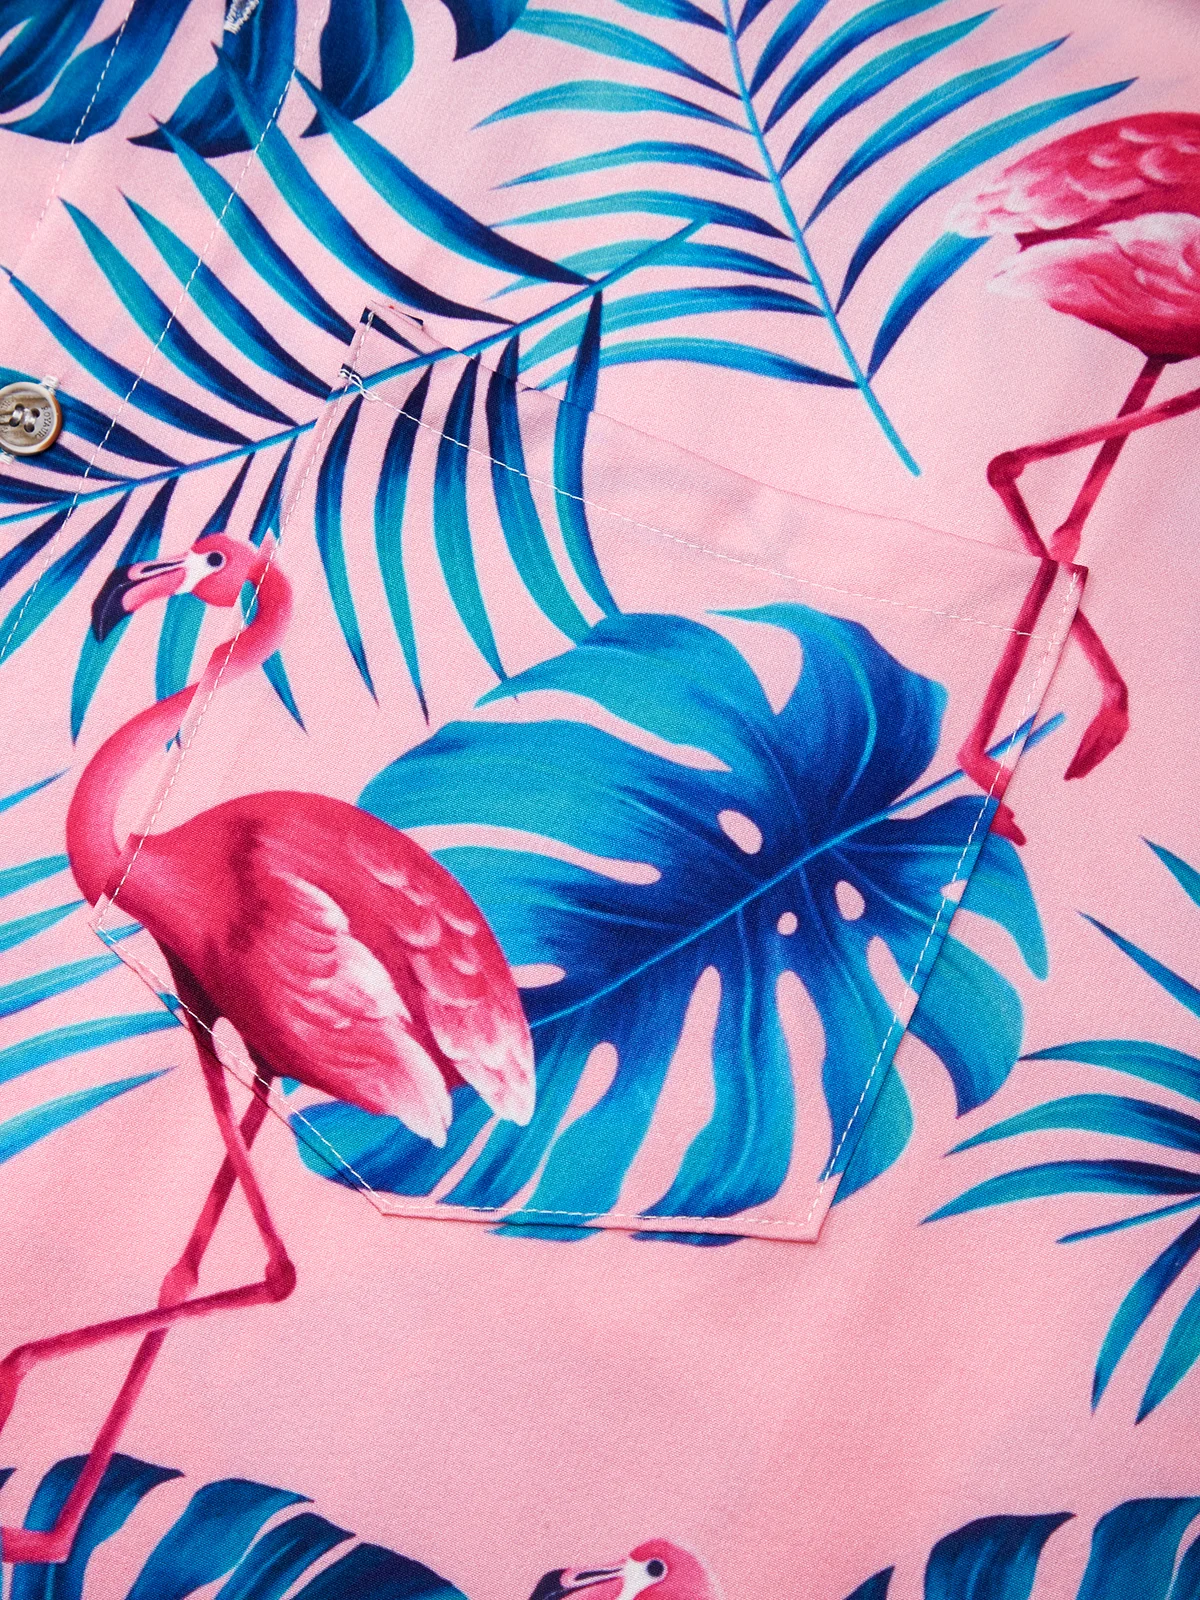 Royaura® Flamingo Pink Hawaii Shirt Men's Button Pocket Short Sleeve Shirt Big Tall